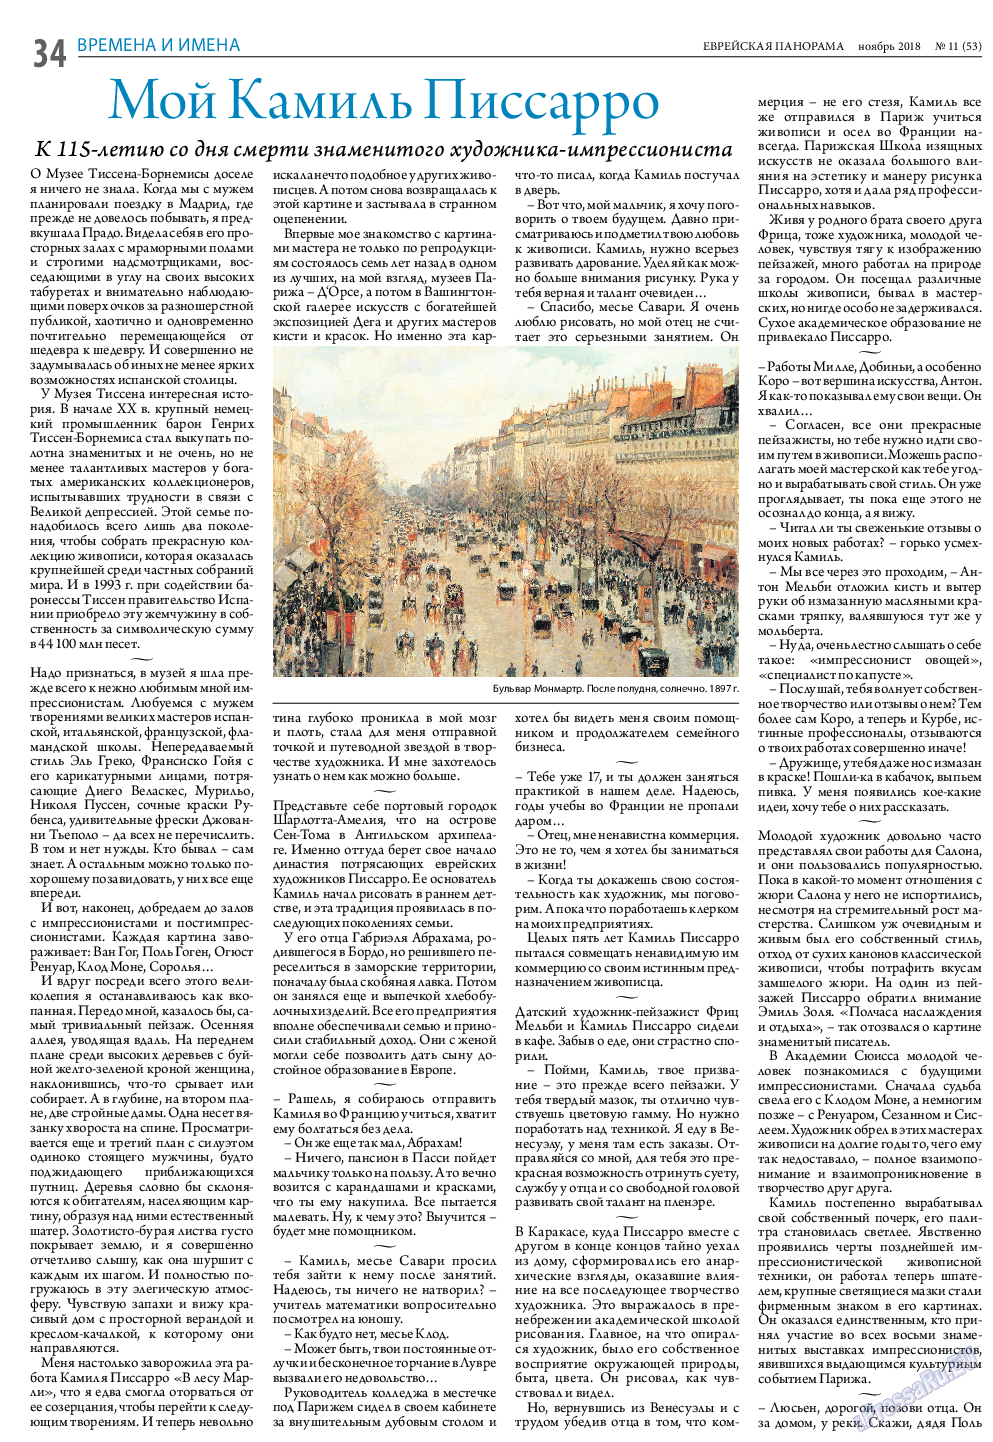 Еврейская панорама, газета. 2018 №11 стр.34